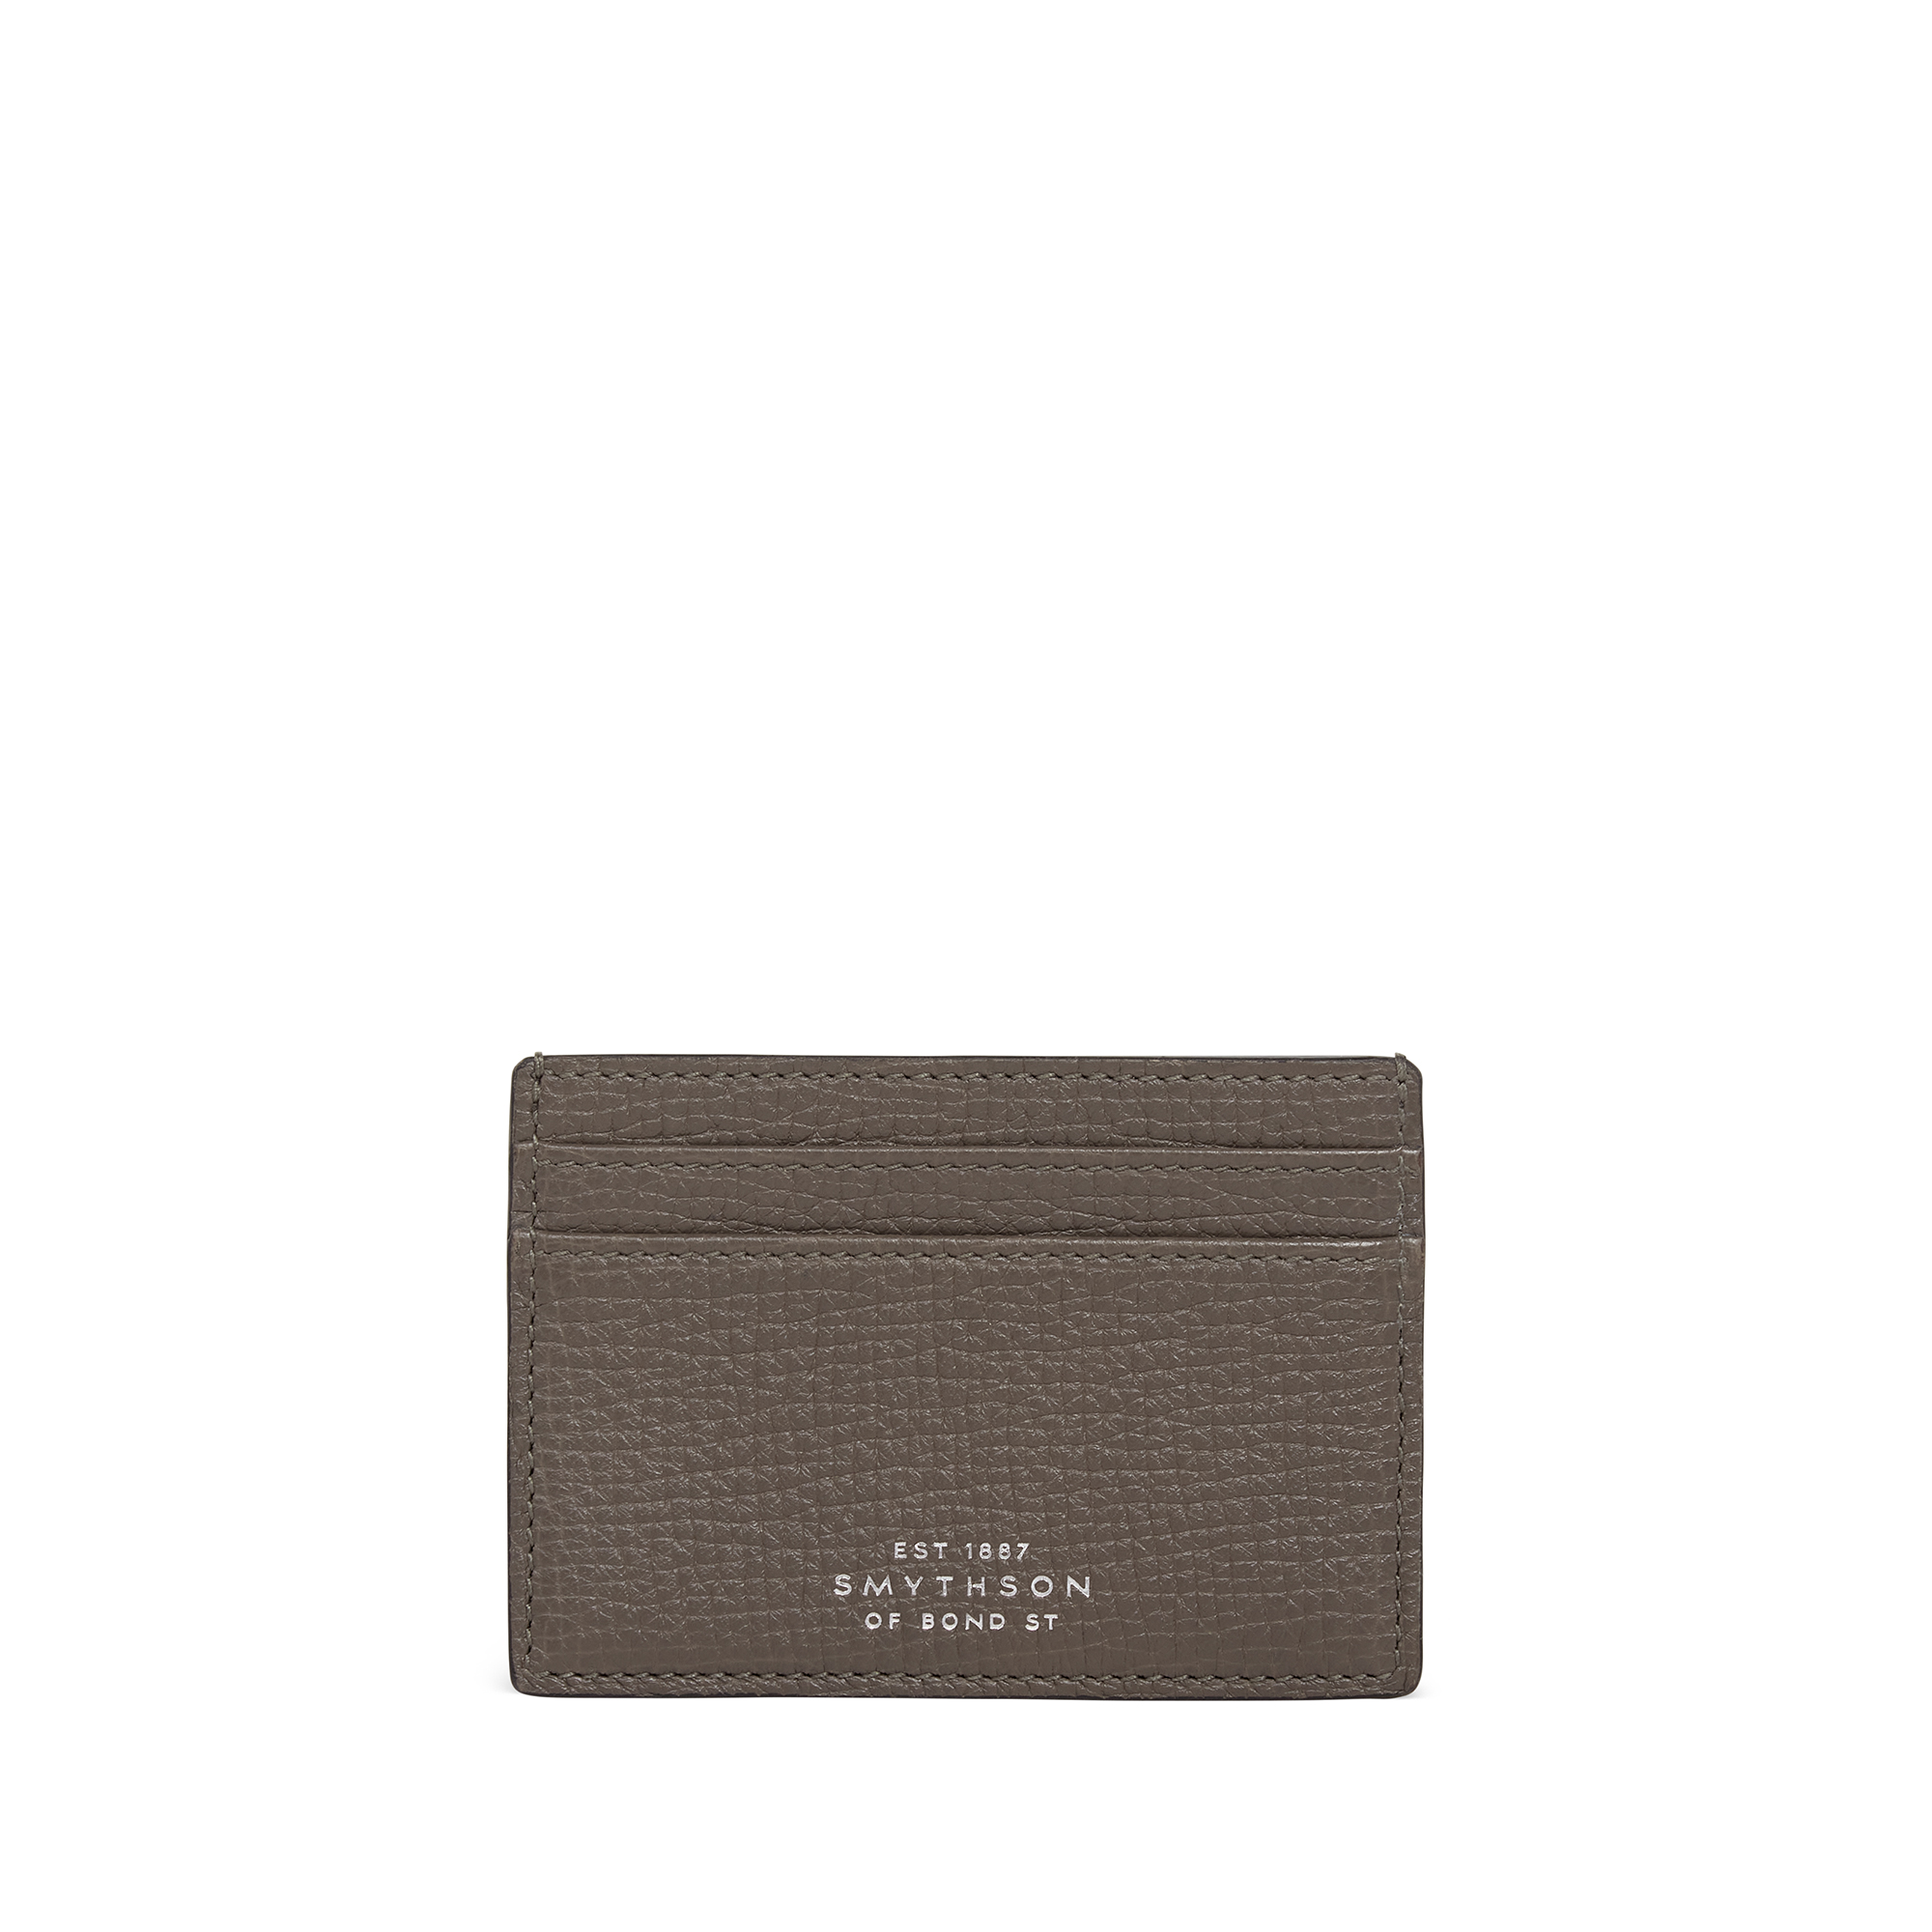 LOUIS VUITTON LUDLOW WALLET  Best mini wallet or card holder